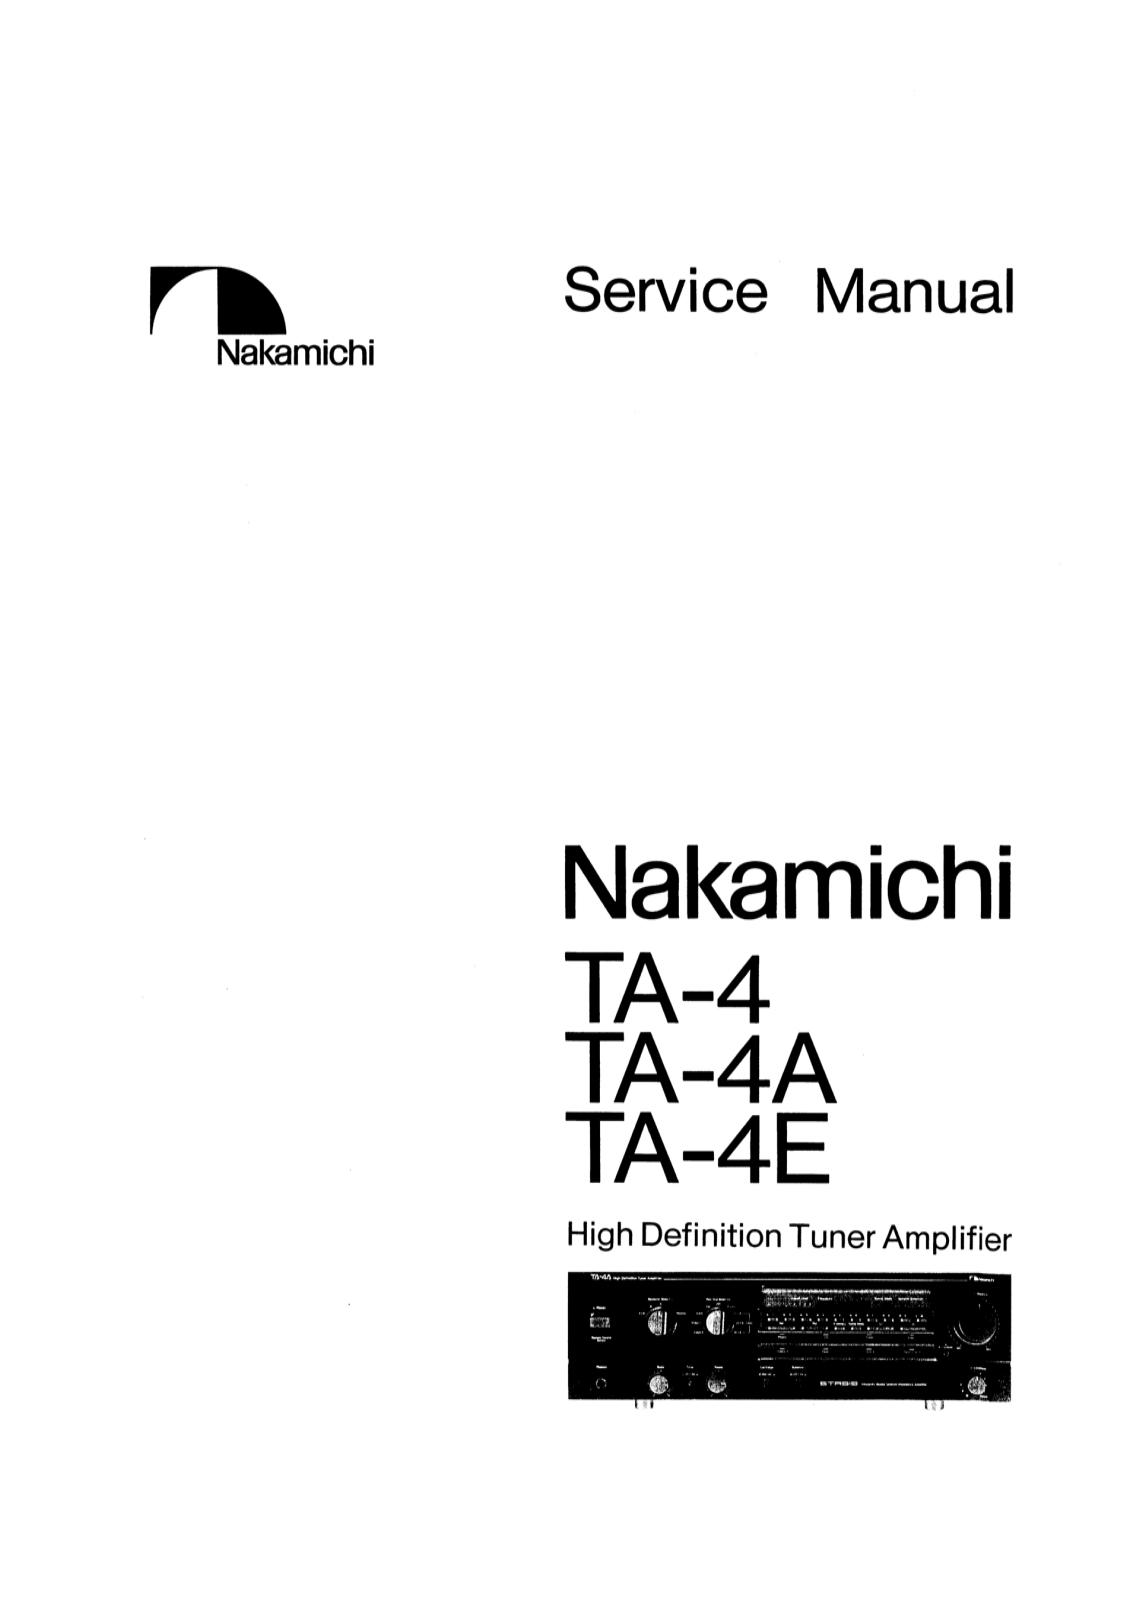 Nakamichi TA-4-E, TA-4-A, TA-4 Service Manual